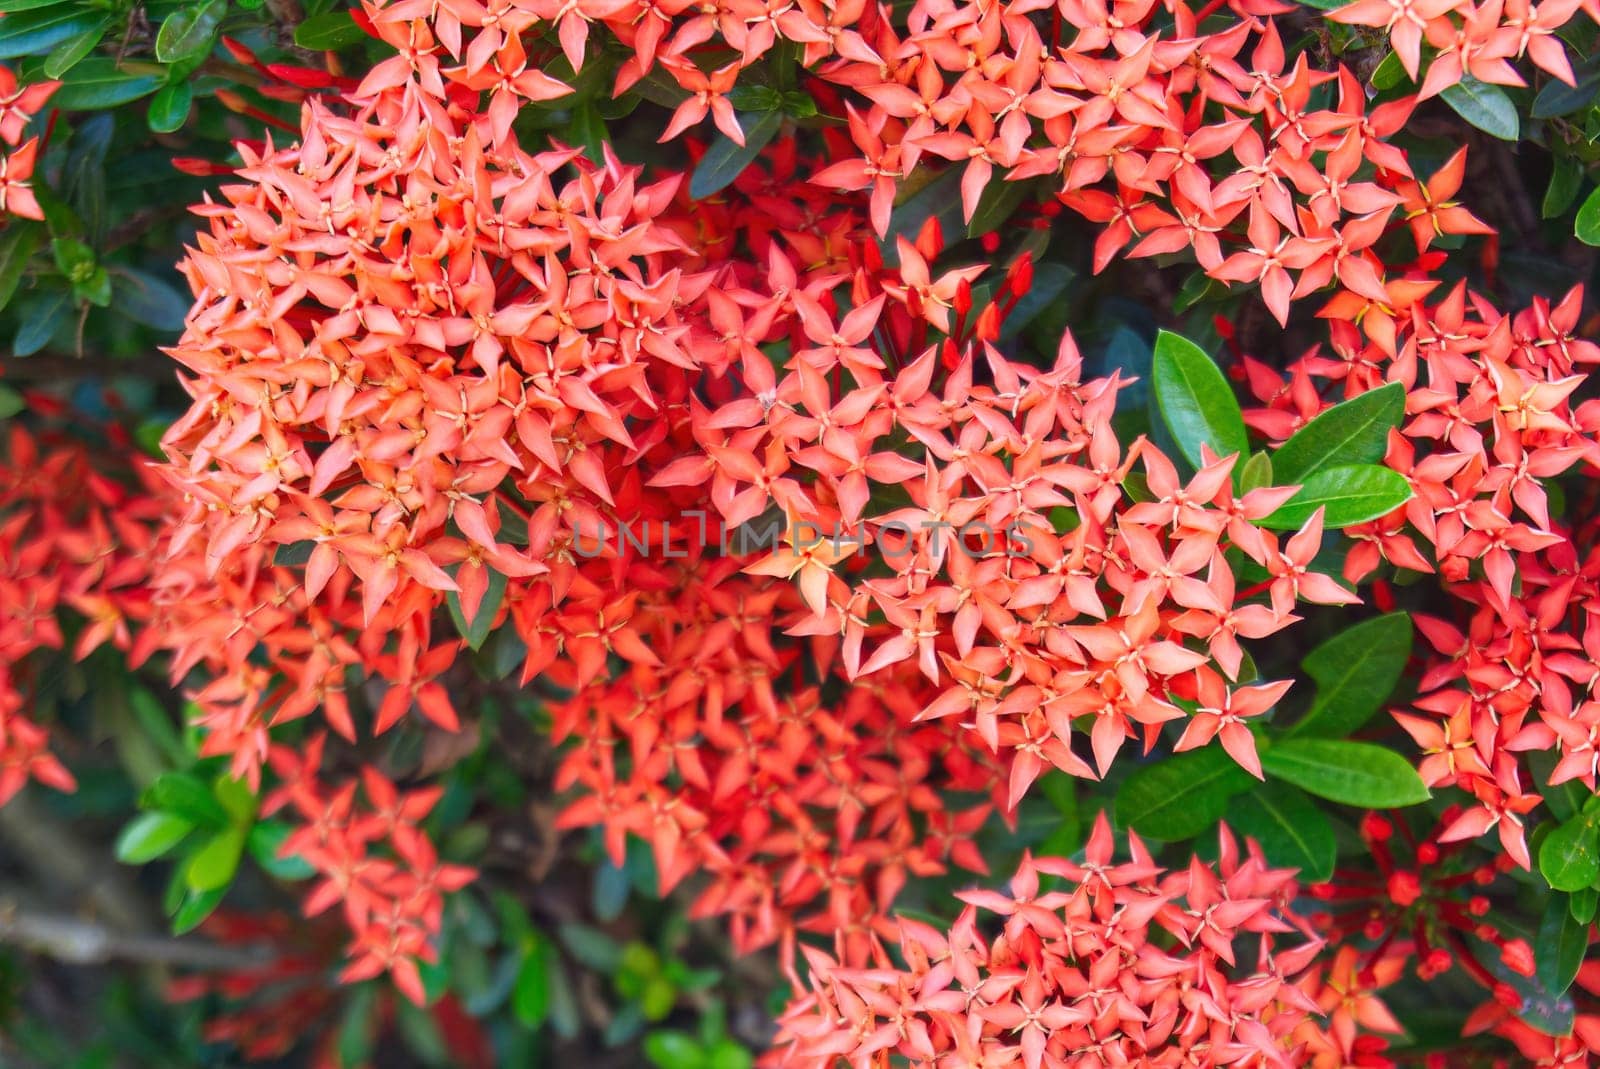 Ixora Chinensis Lamk, Ixora flower, Red spike flower, King Ixora by capple